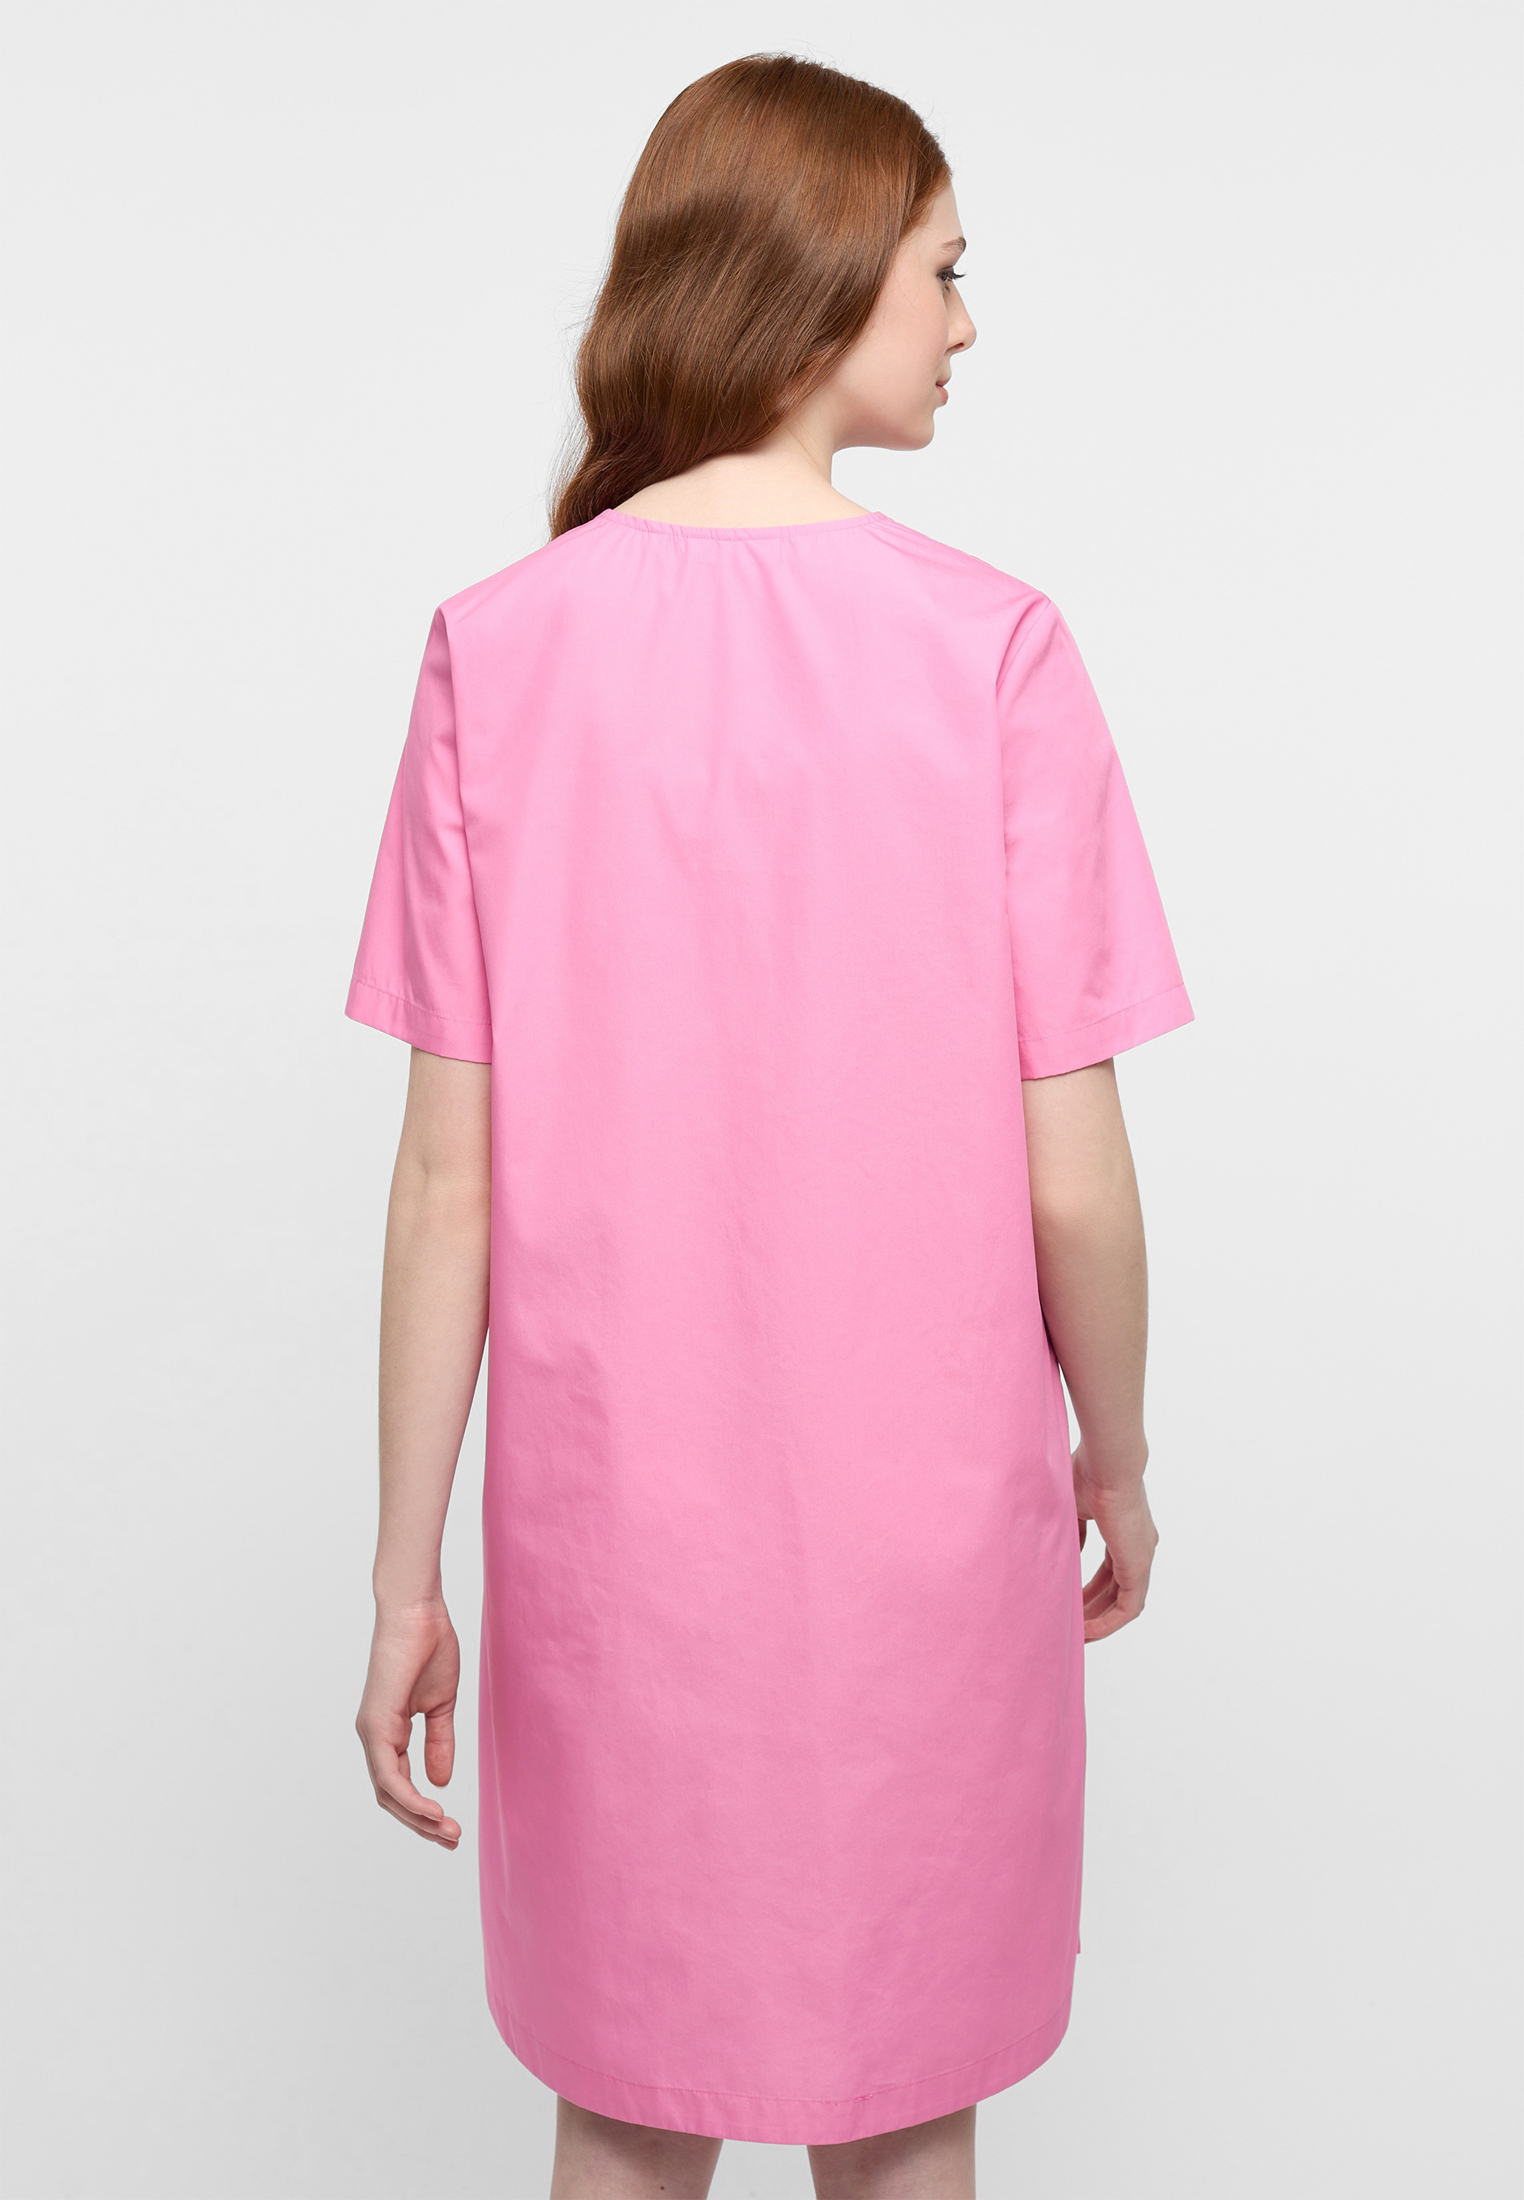 | pink | dress 34 | pink | short in sleeve Shirt plain 2DR00211-15-21-34-1/2